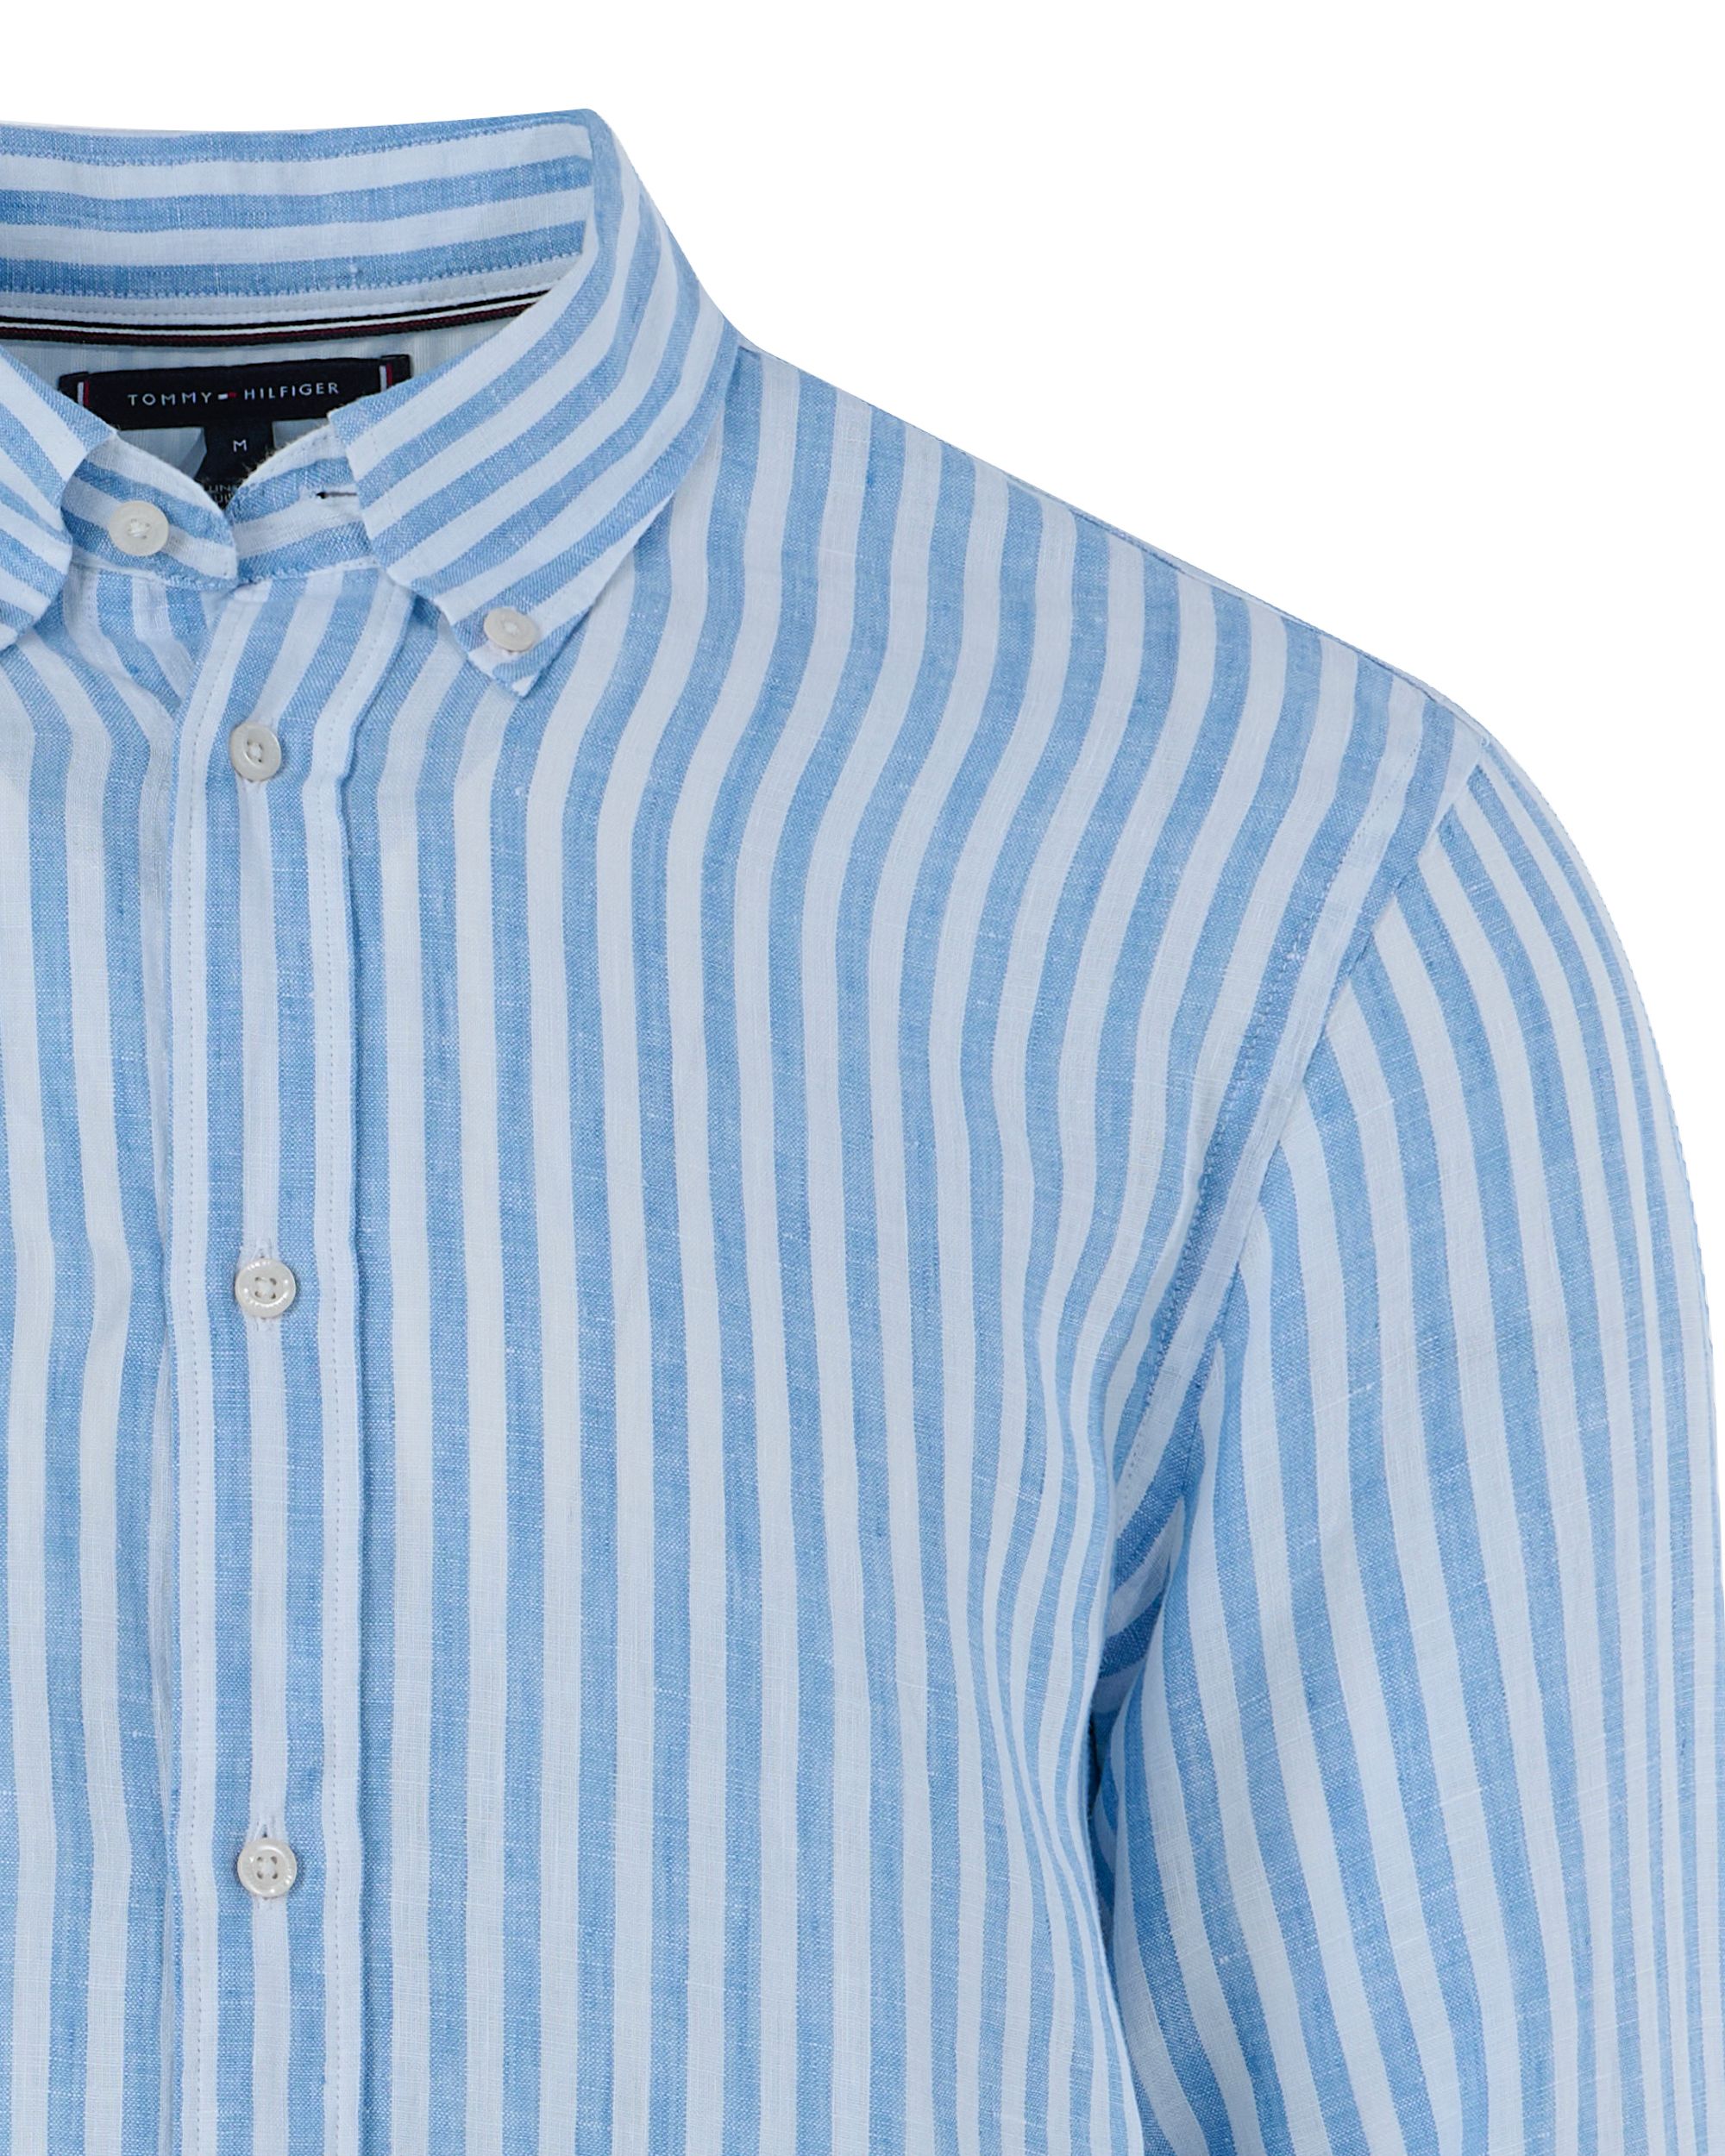 Tommy Hilfiger Menswear Casual Overhemd LM Blauw 094629-001-L